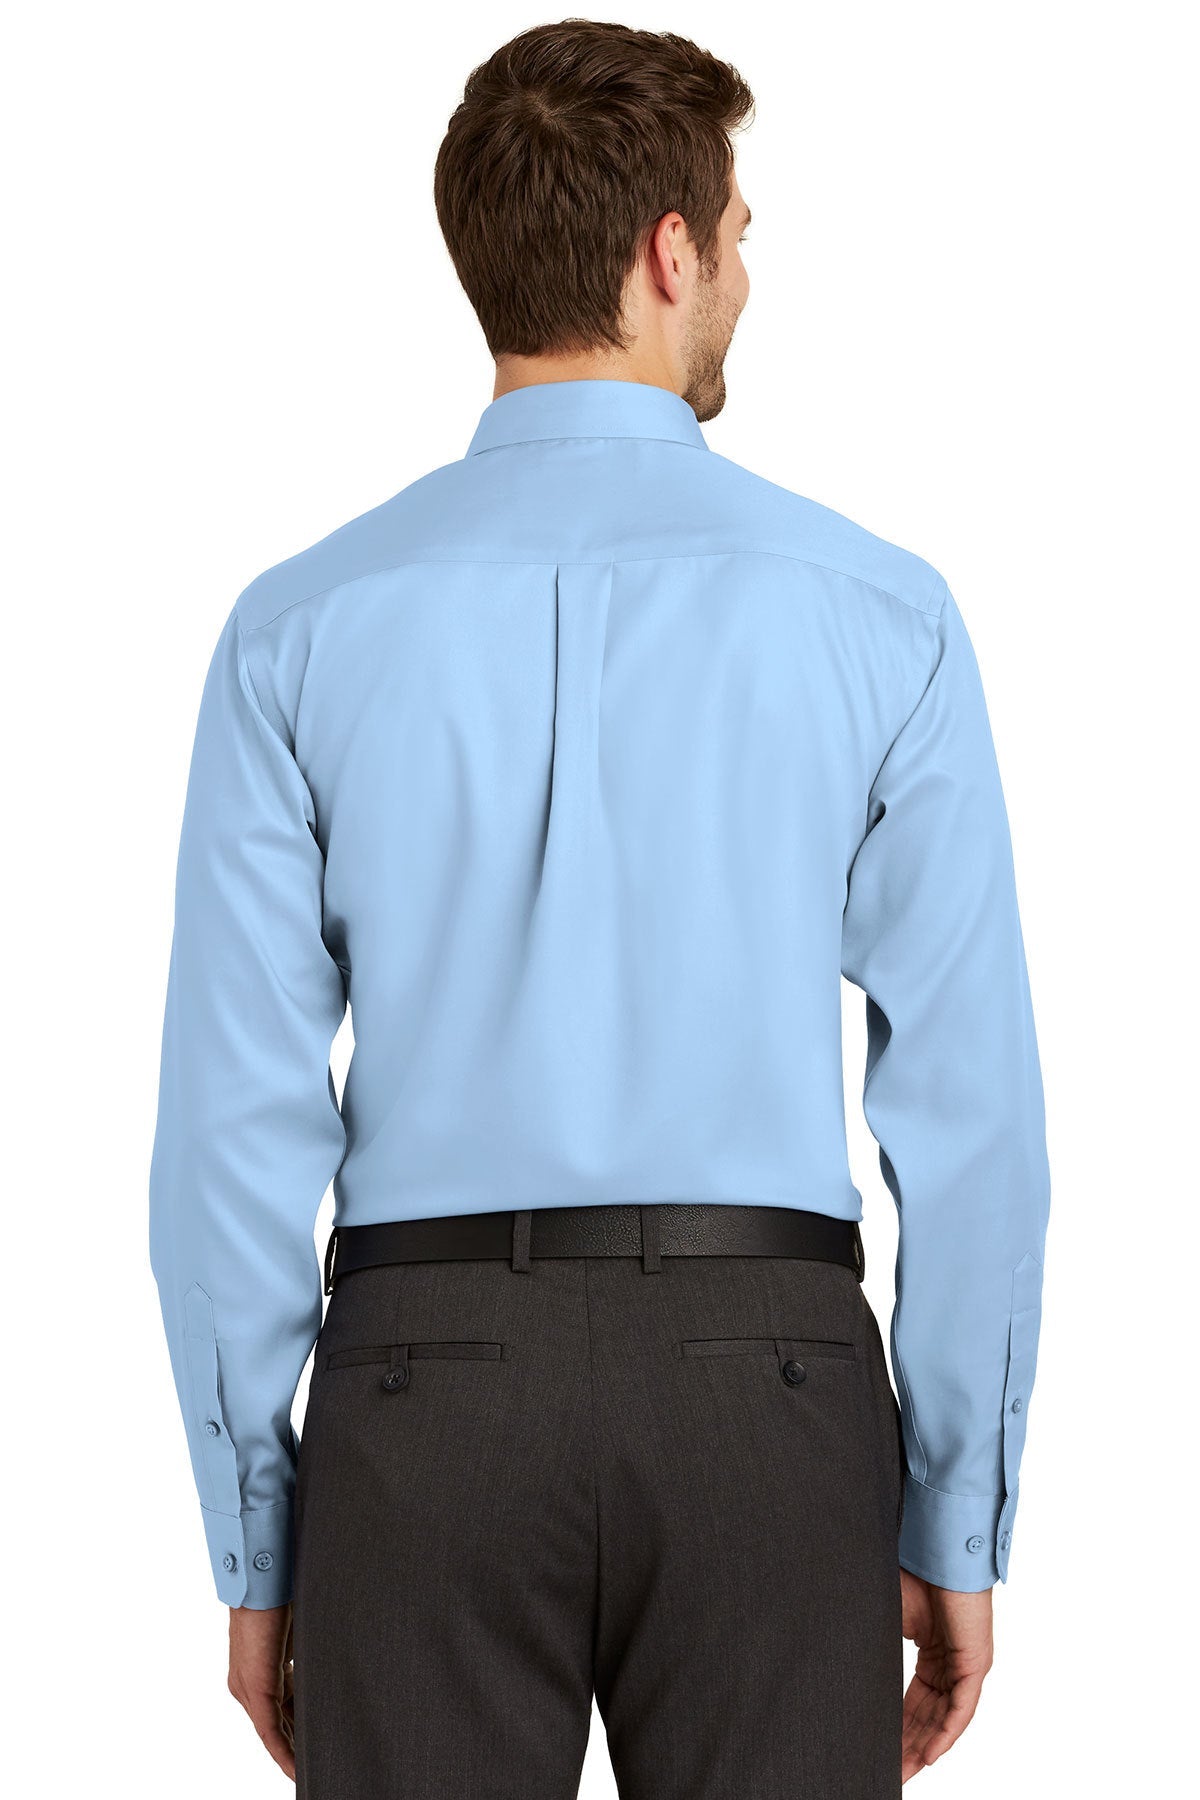 Port Authority Non-Iron Twill Shirt S638 Sky Blue